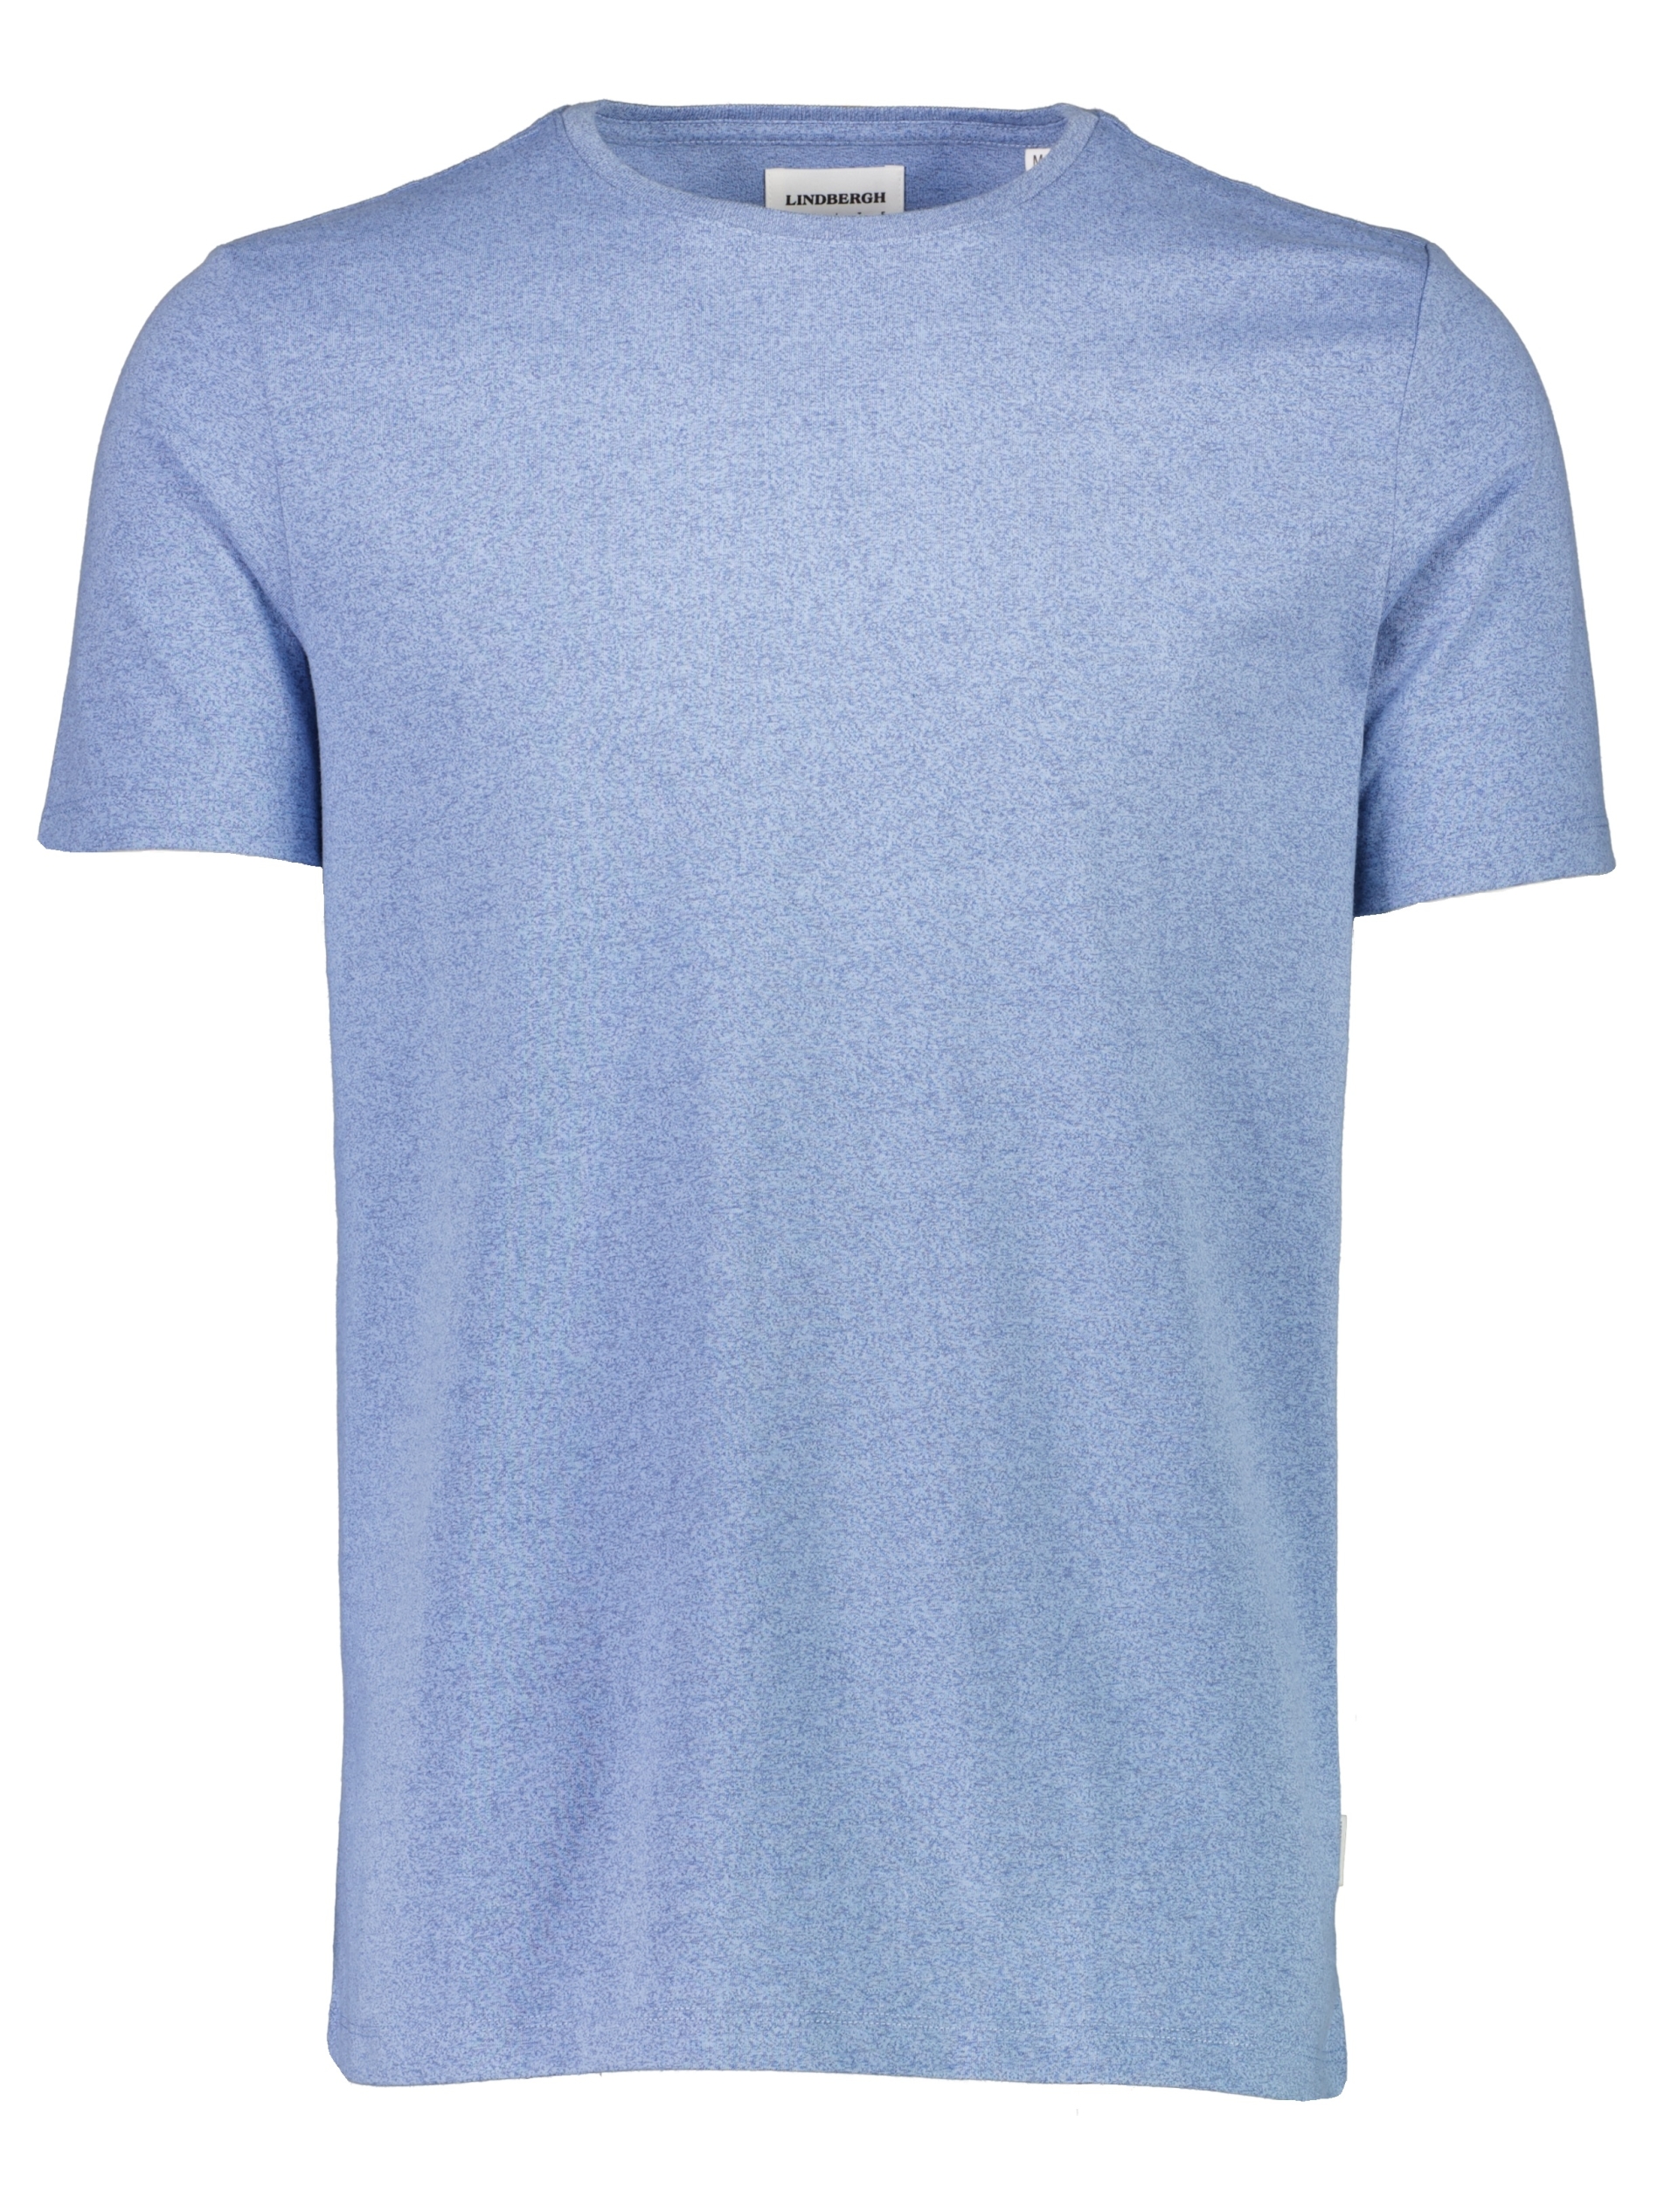 Lindbergh T-shirt blau / new dk blue mix